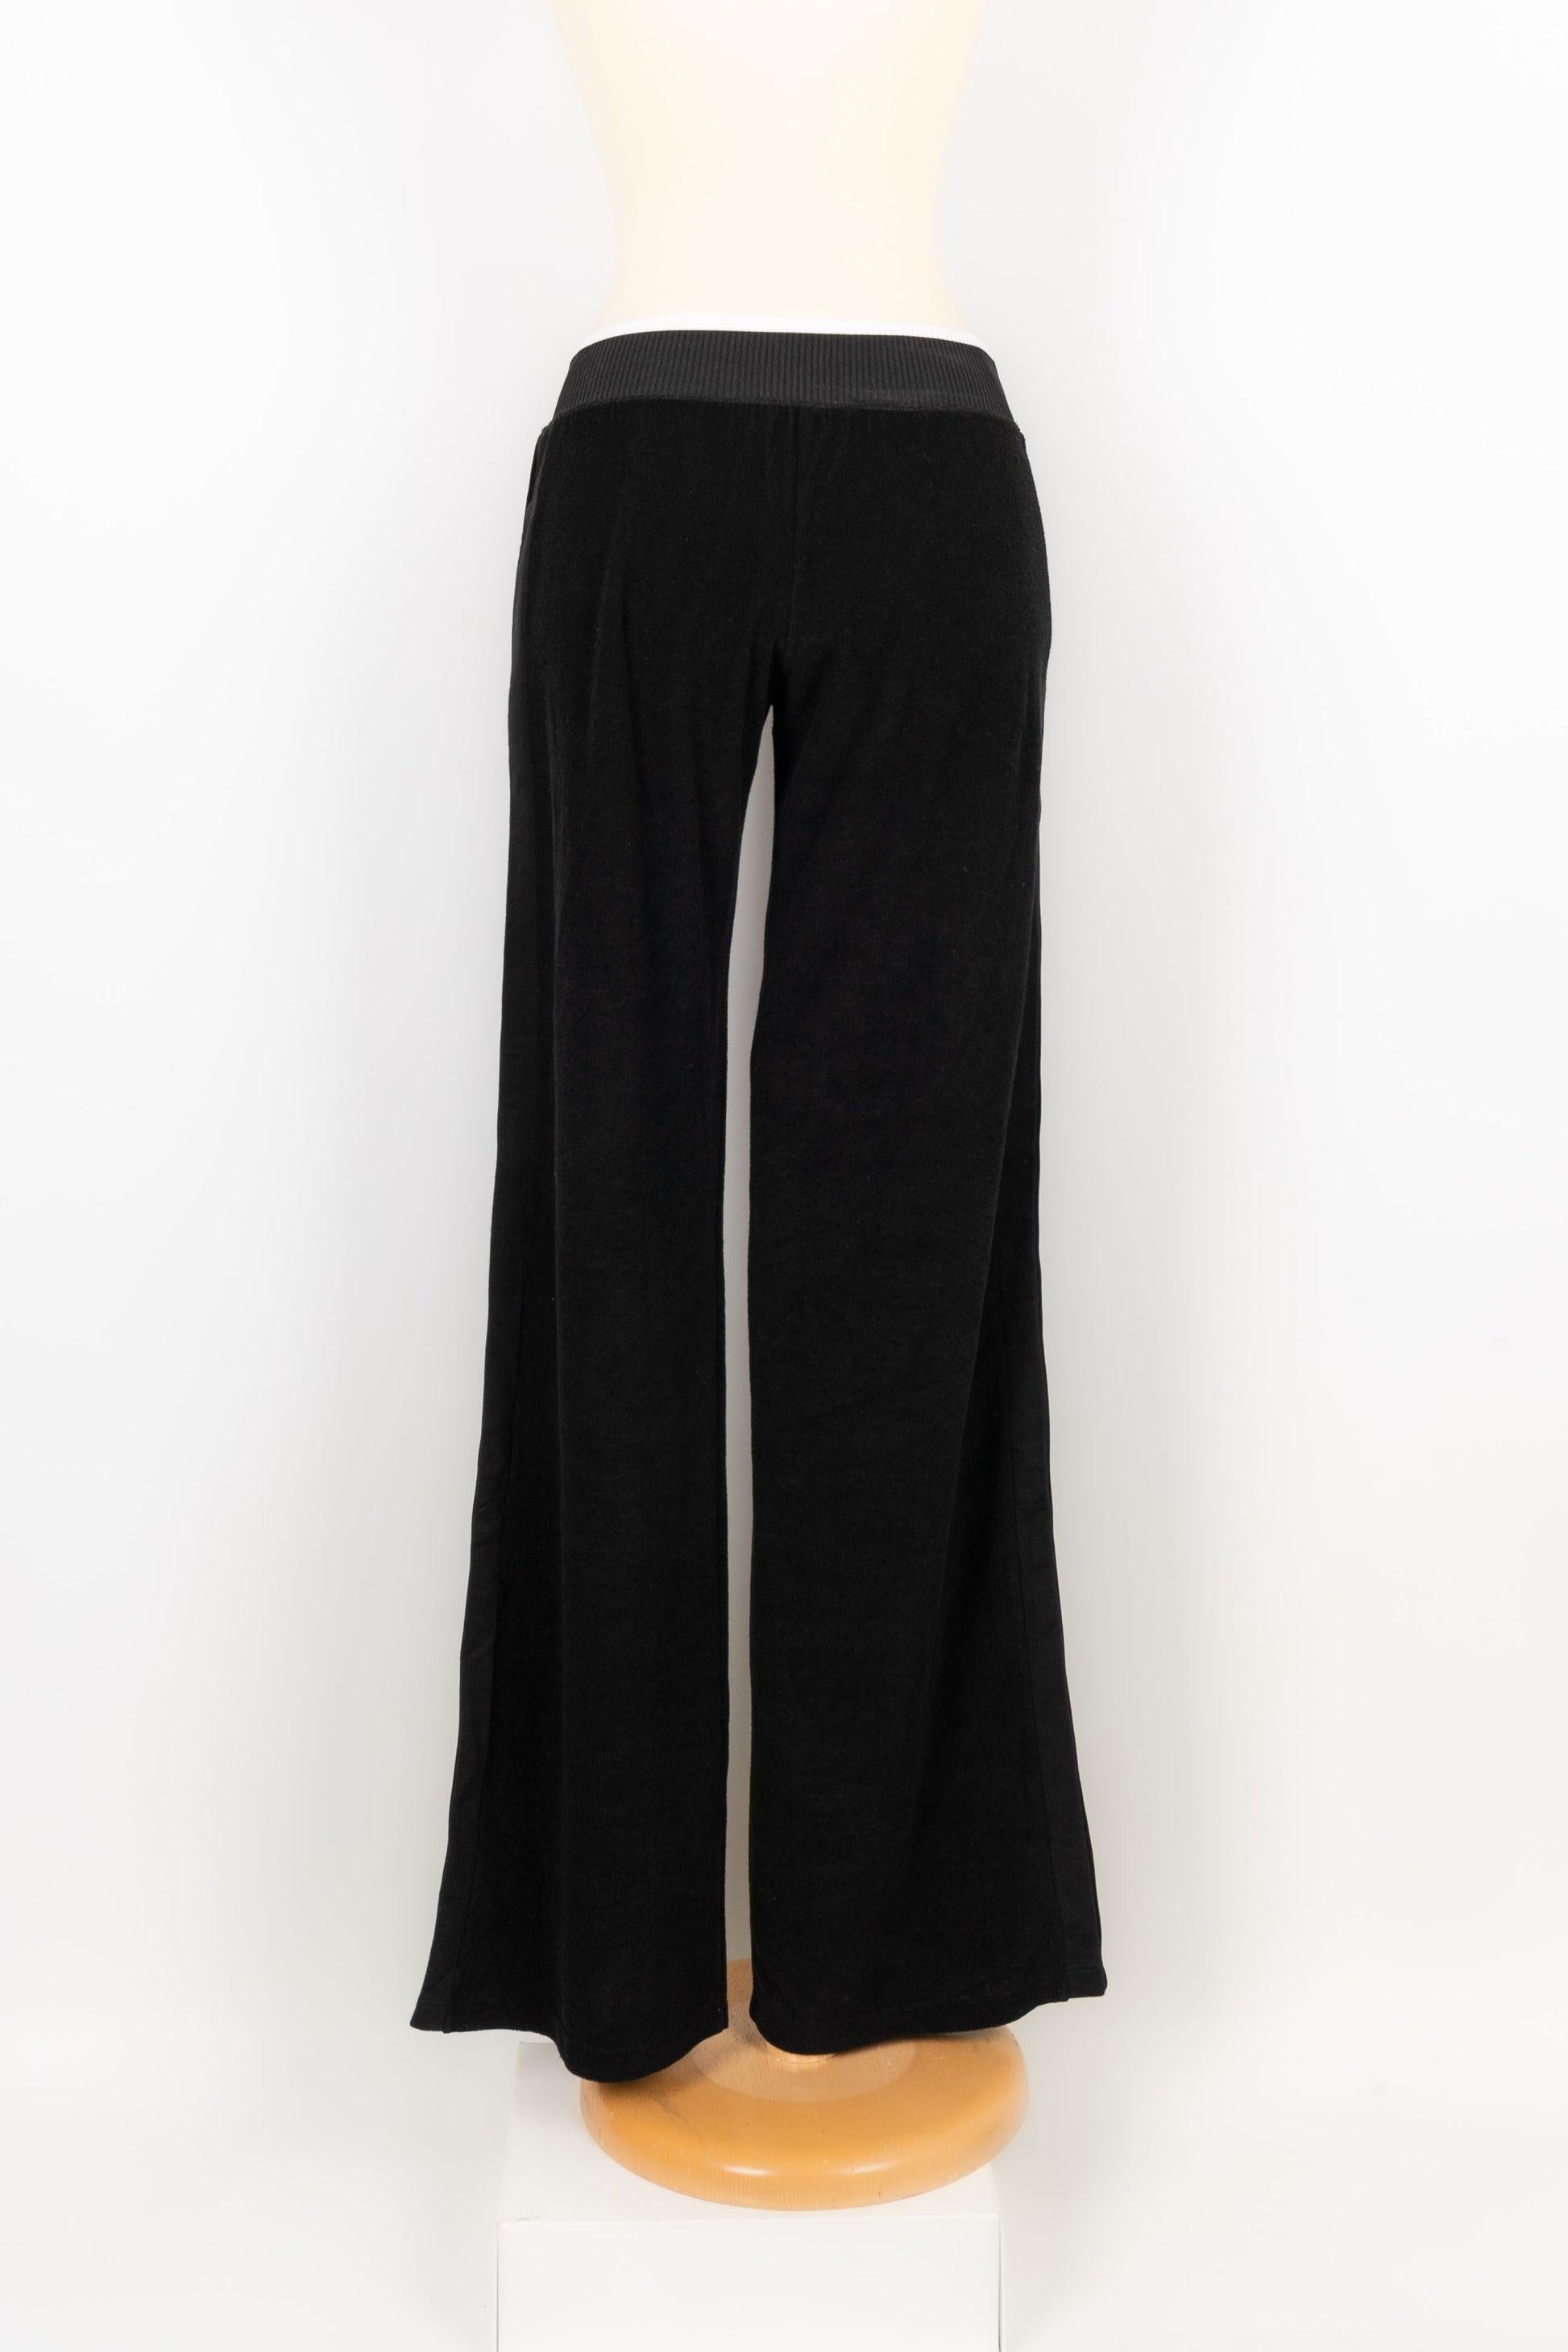 Black Chanel Terry Cloth Pants